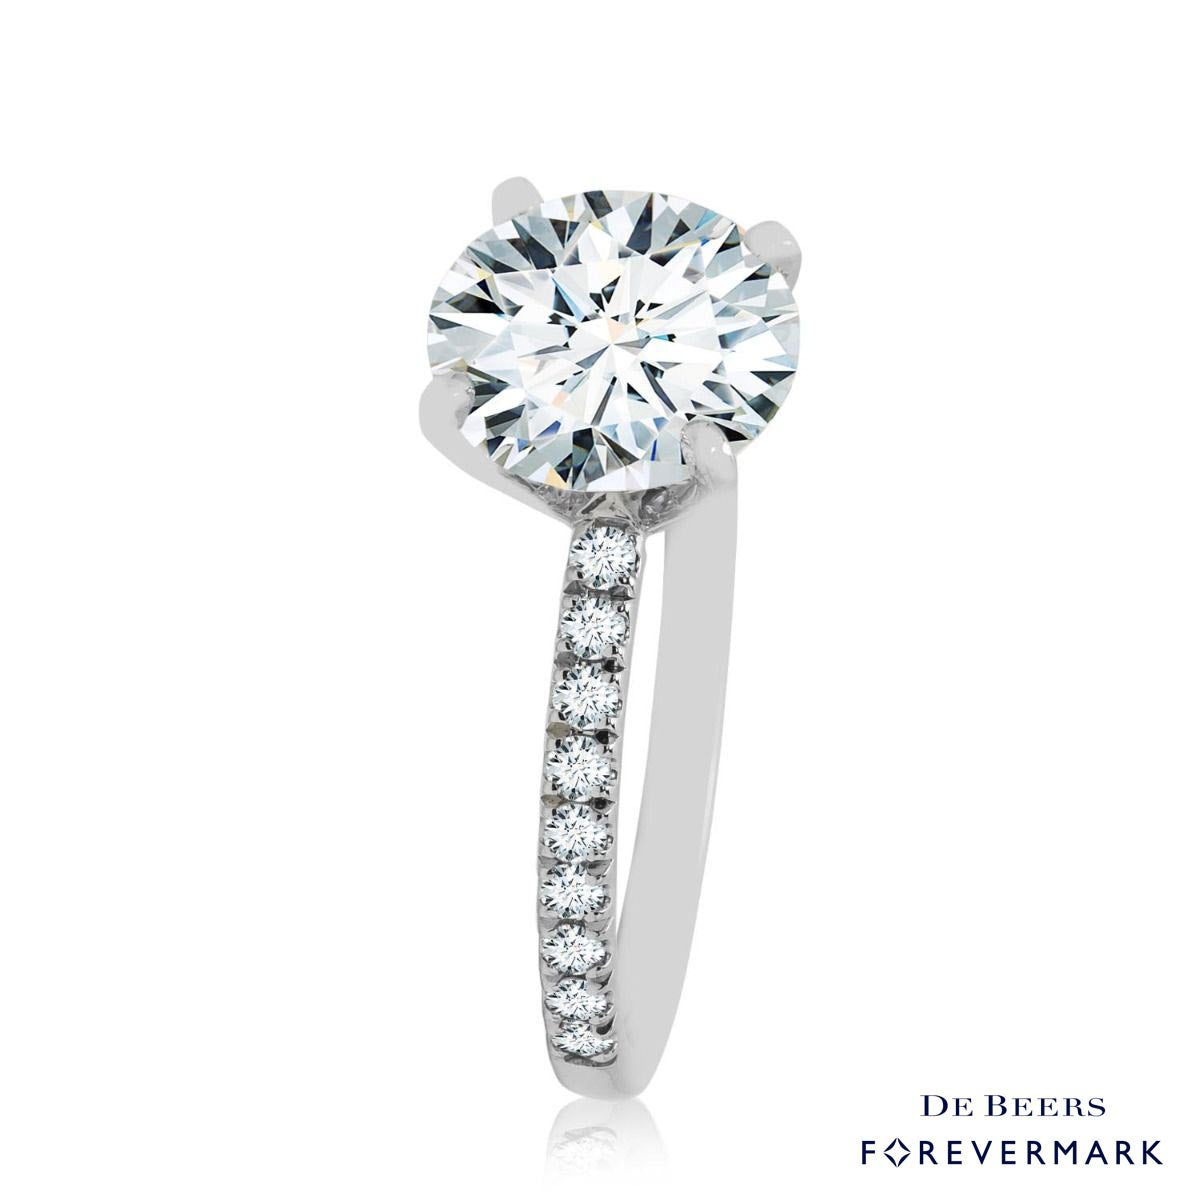 De Beers Forevermark Exceptional Diamond Solitaire Ring in Platinum (3 3/8ct tw)